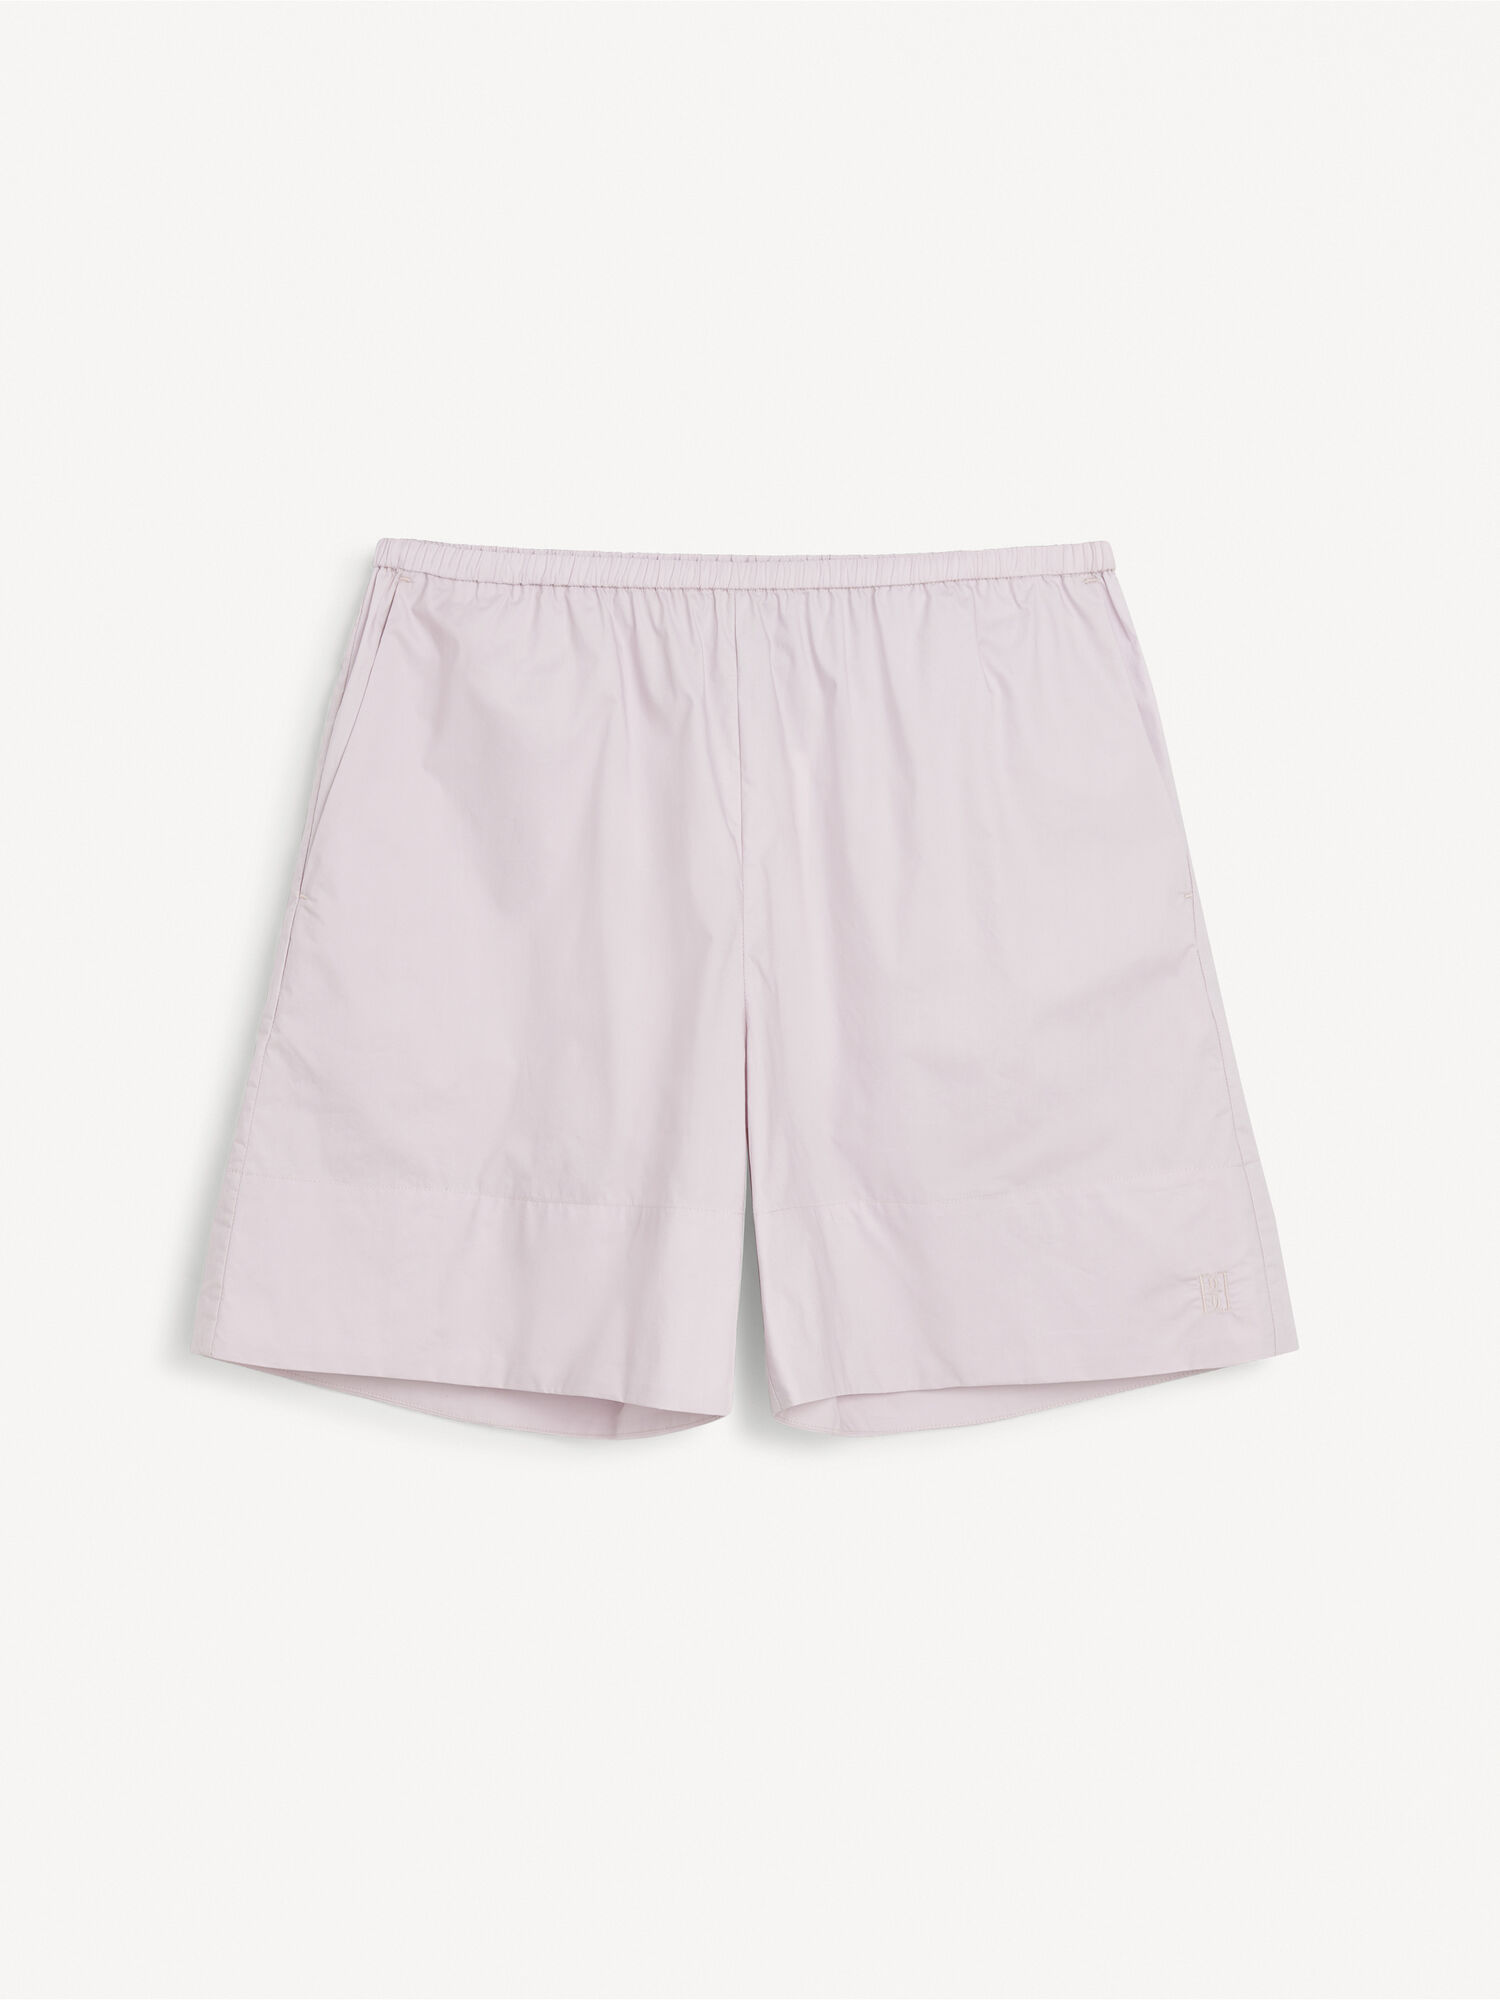 Siona shorts - Buy Shorts online